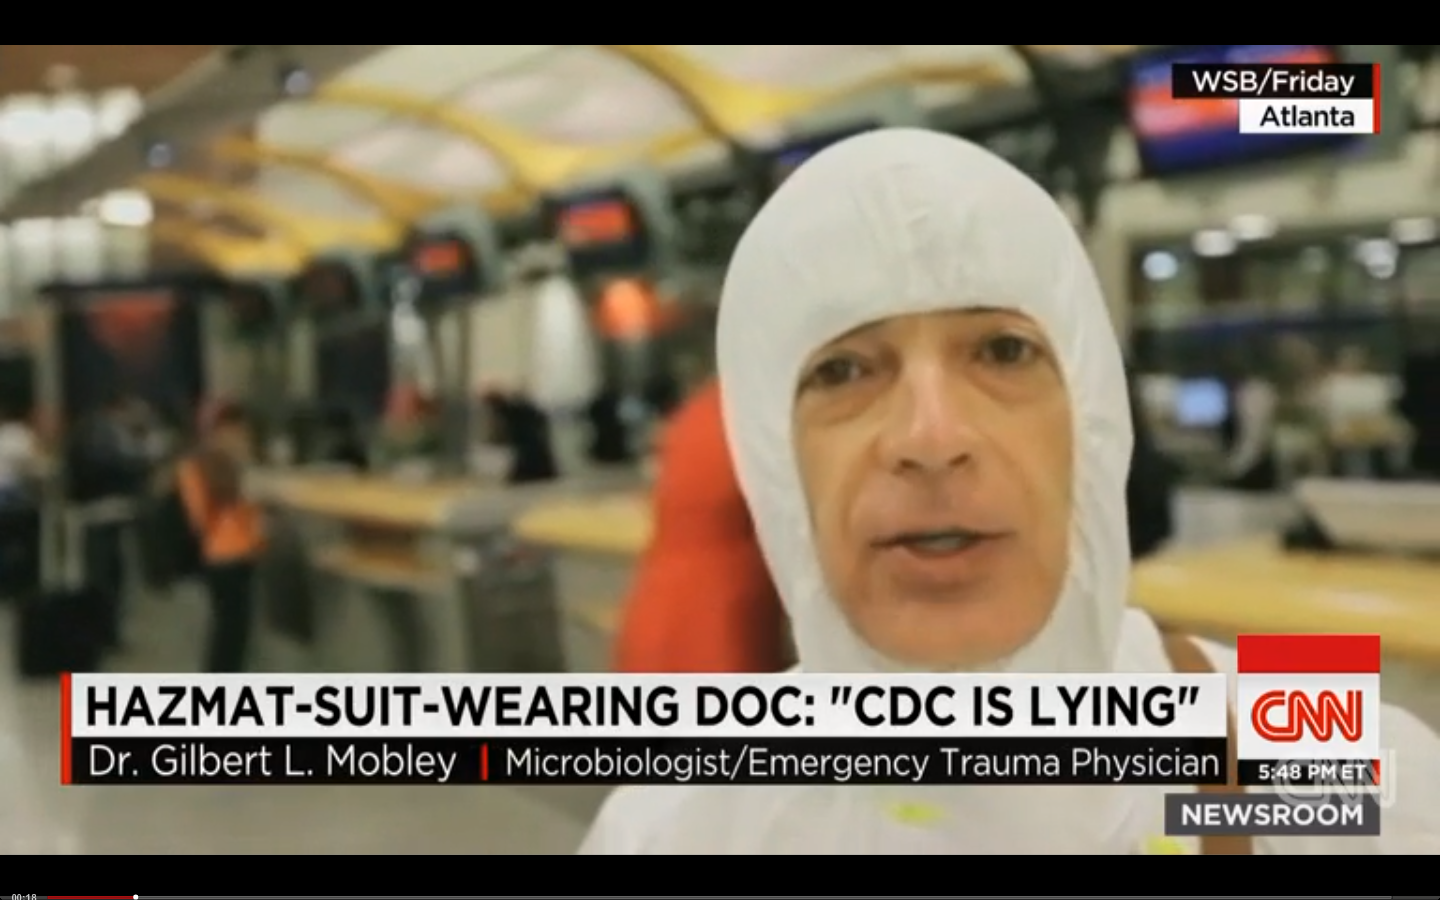 CDC Exposes Their Employees to Ebola